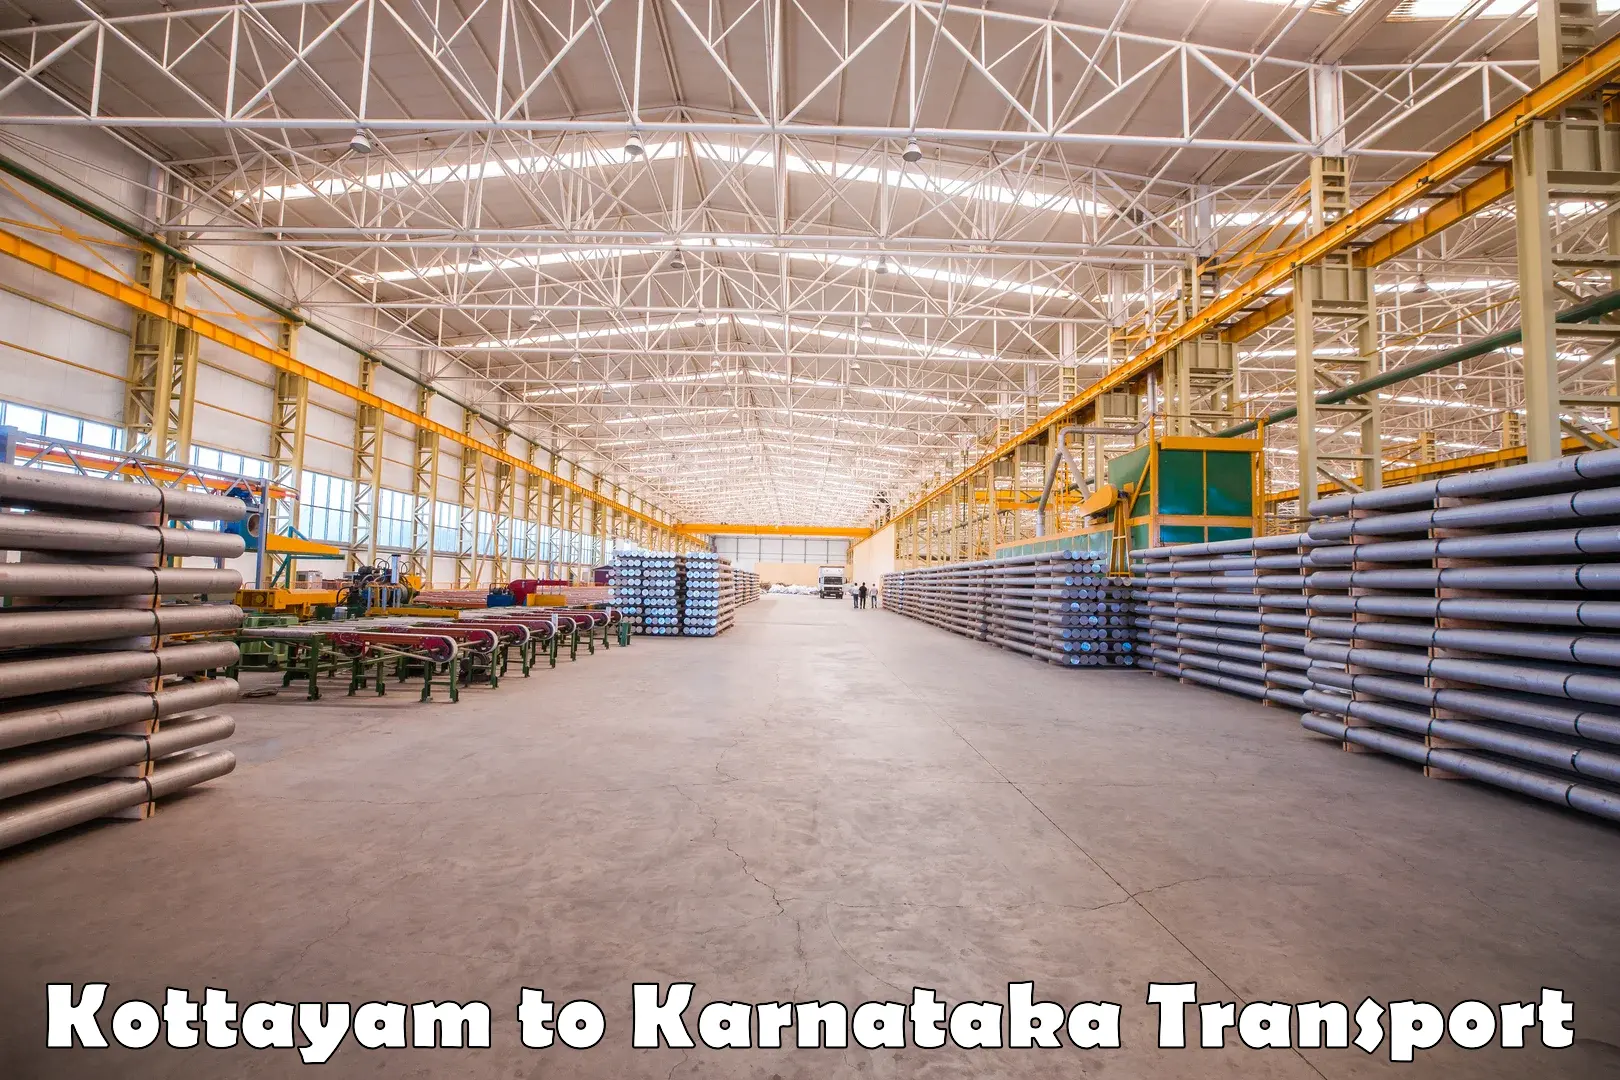 Transport shared services Kottayam to Kotturu